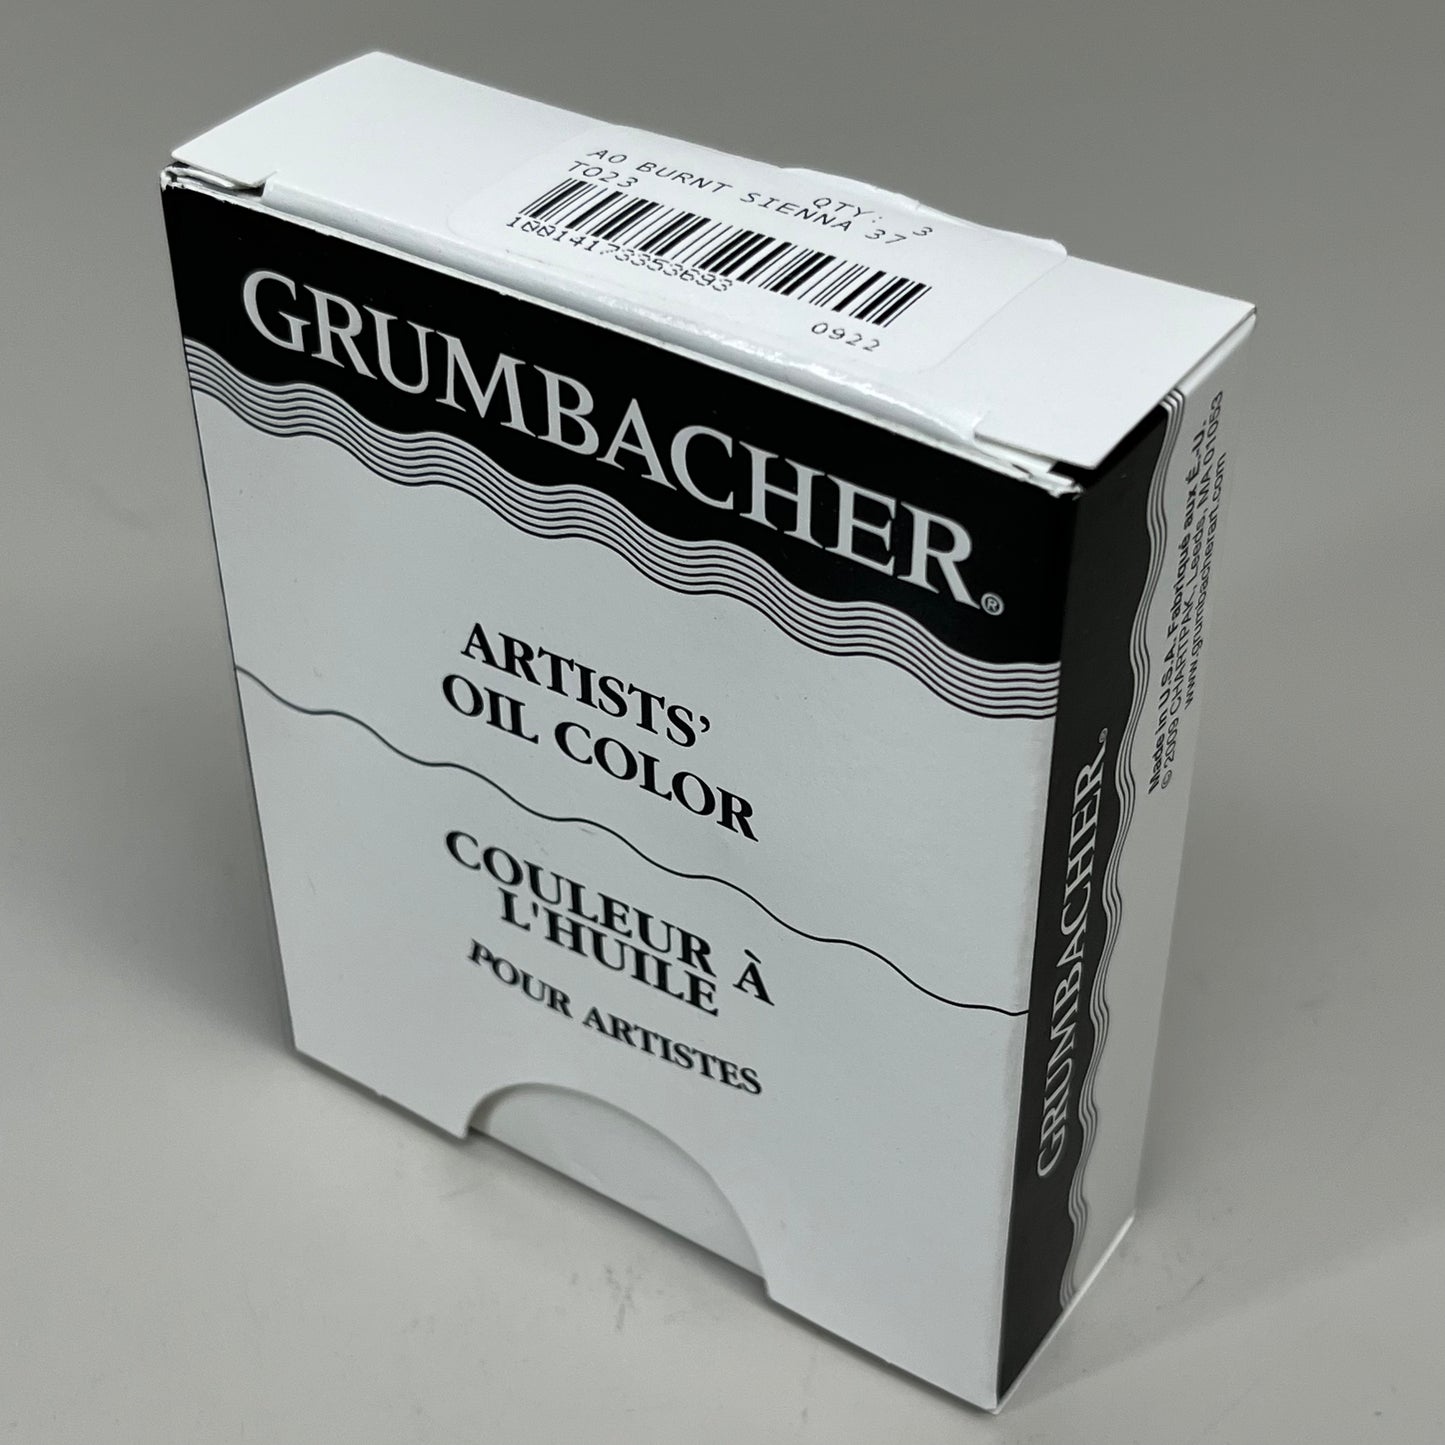 GRUMBACHER 3-PACK! Oil Paint Burnt Sienna 1.25 fl oz / 37 ml T023 (New)